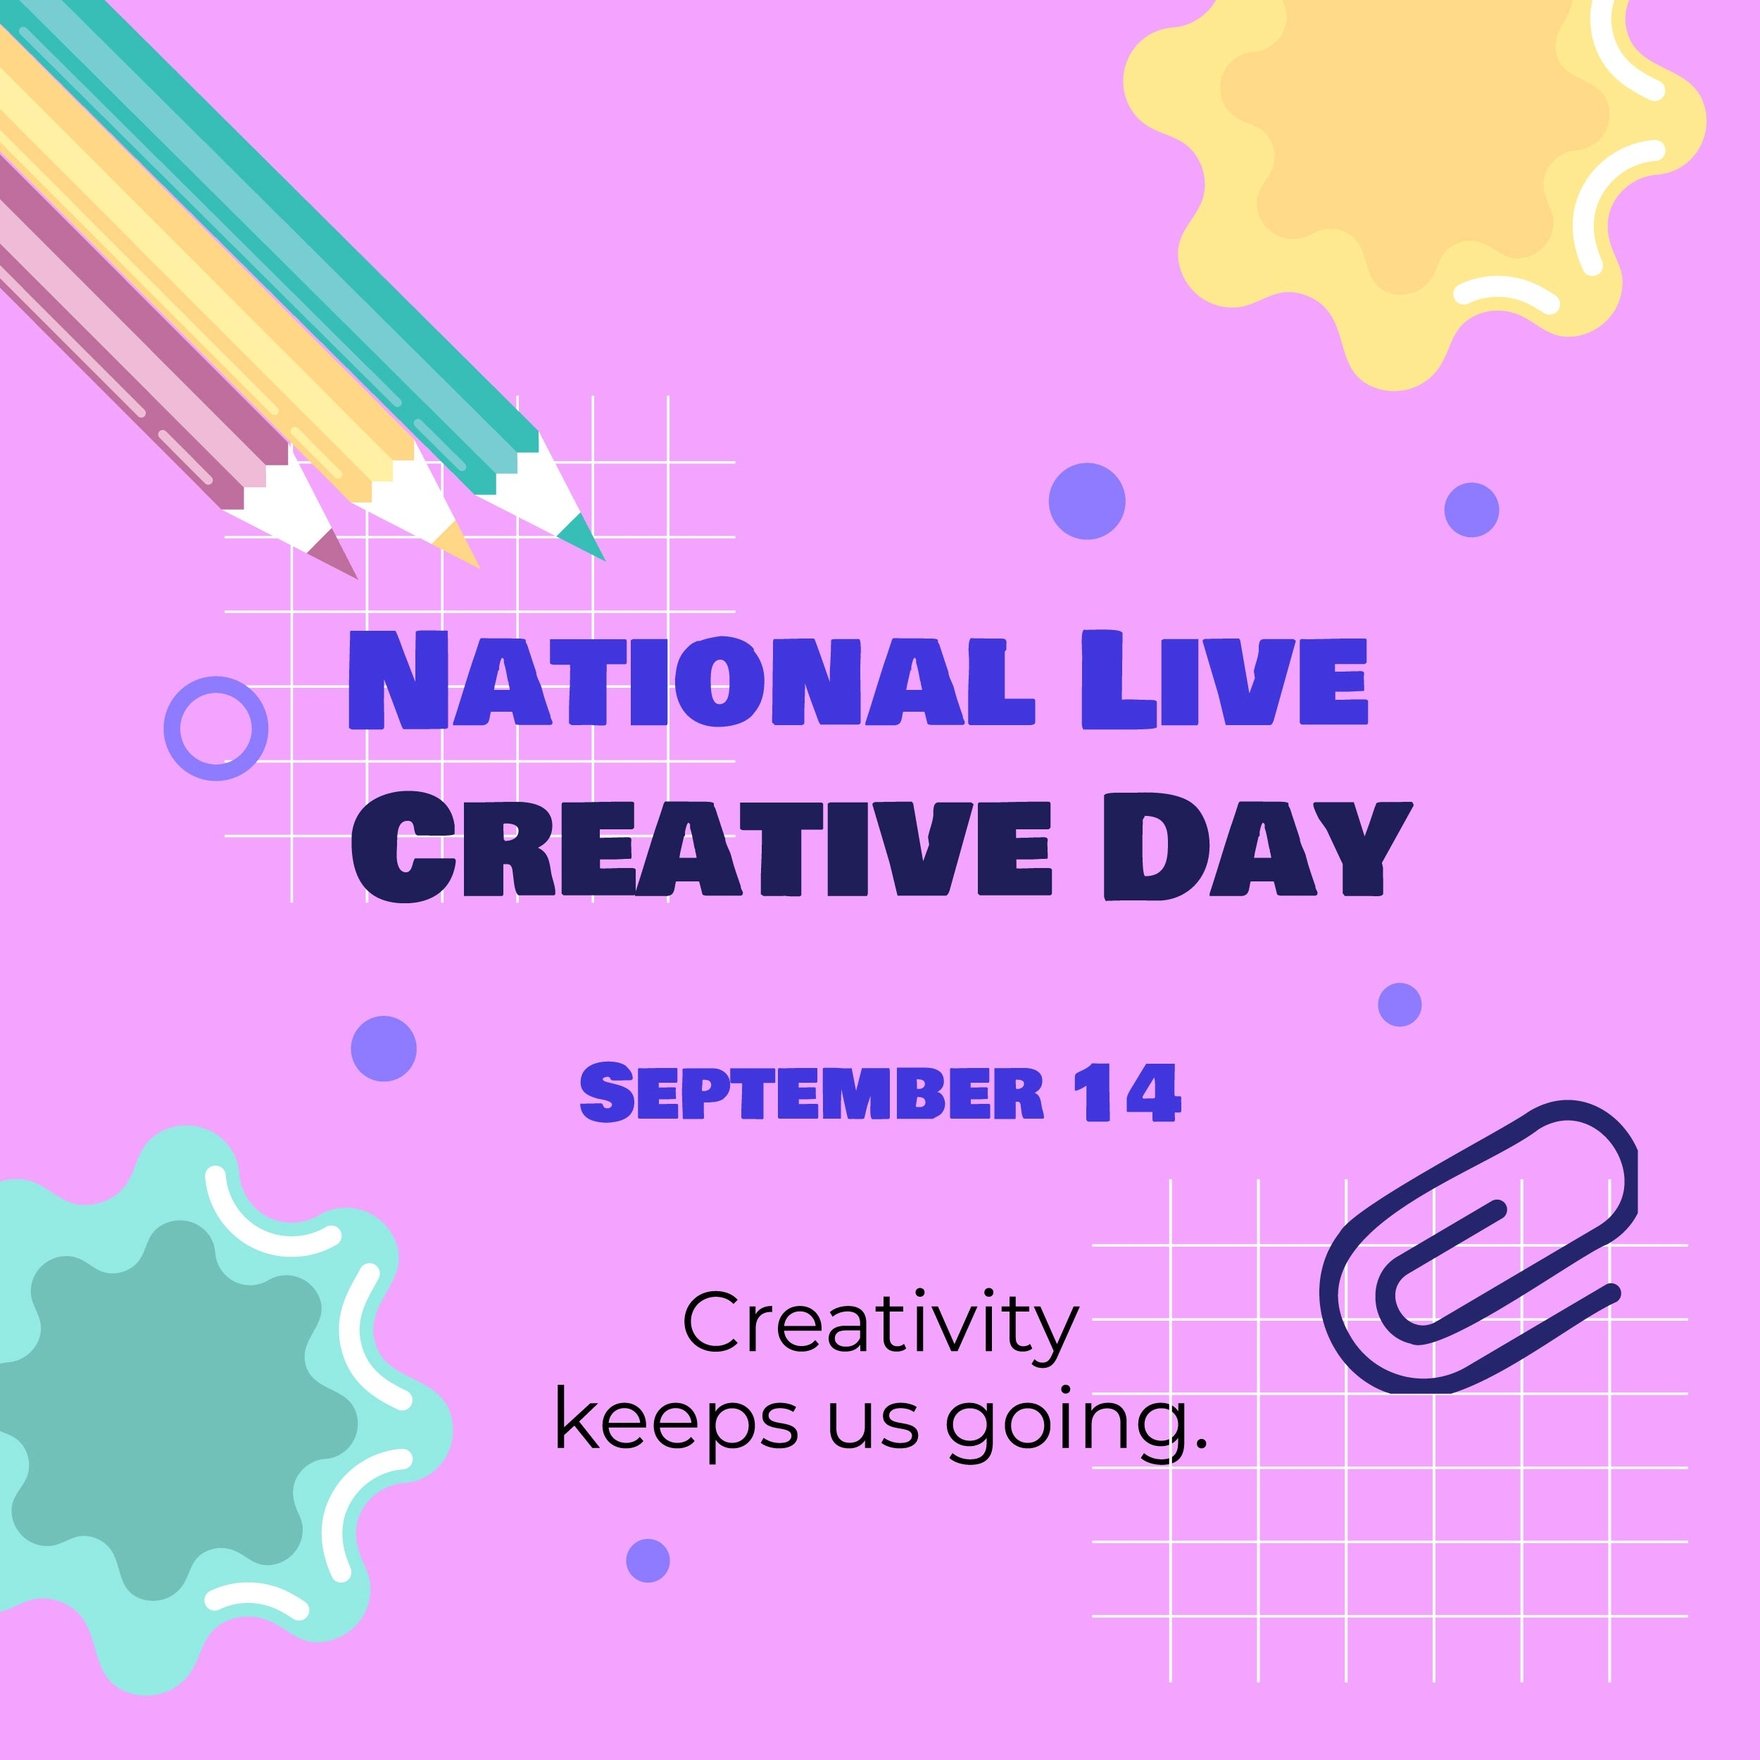 National Live Creative Day Whatsapp Post